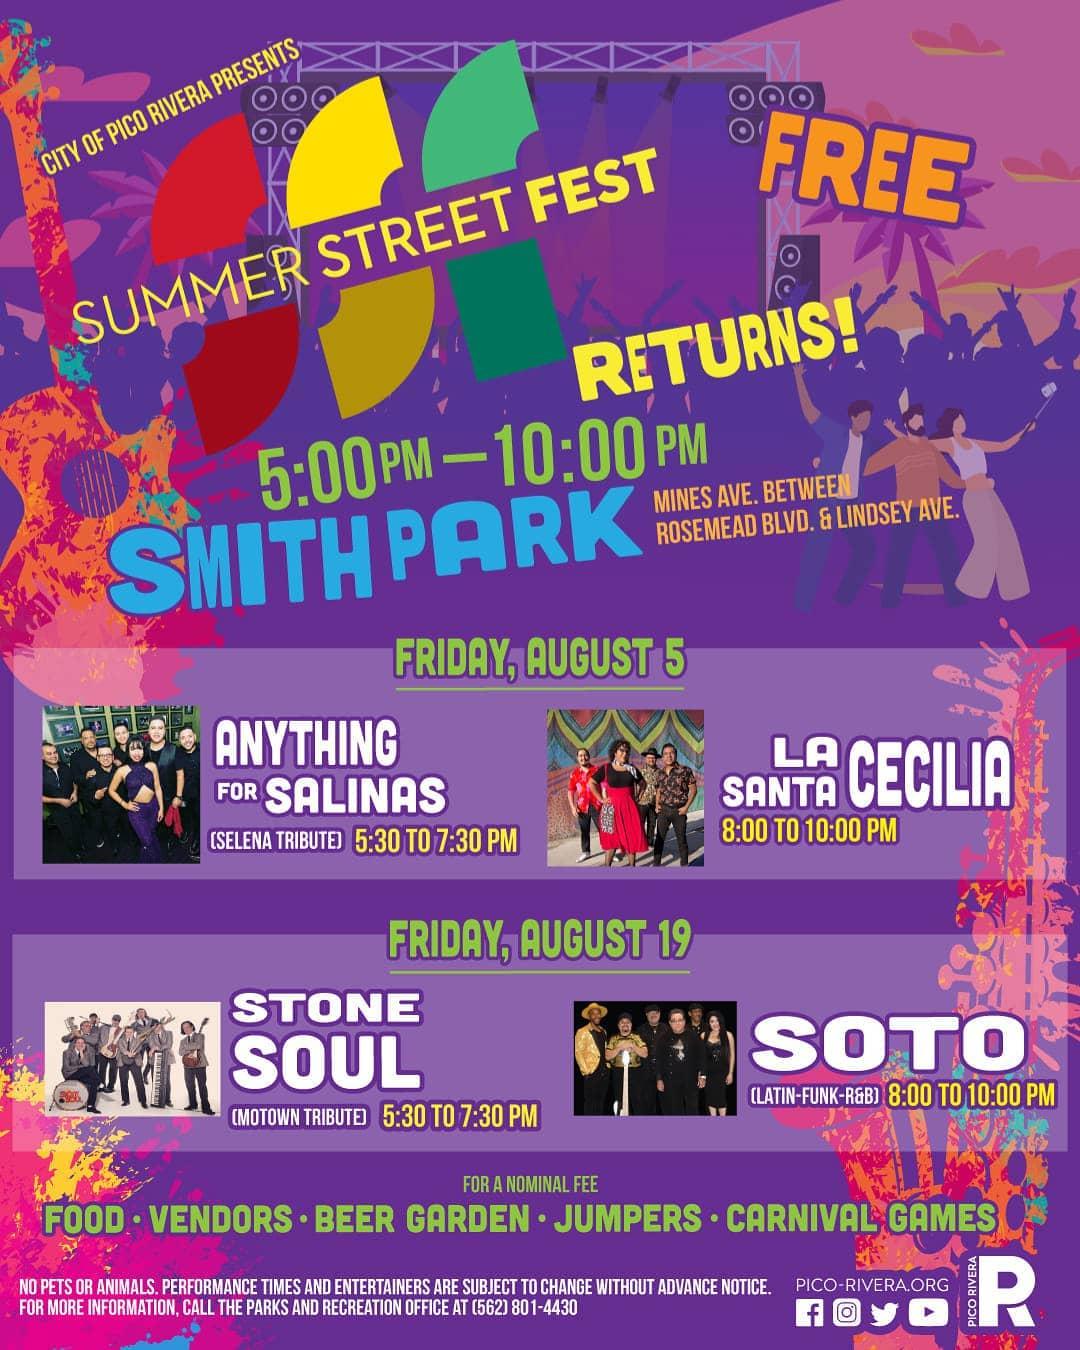 Pico Rivera’s Summer Street Fest is back Downey Latino News